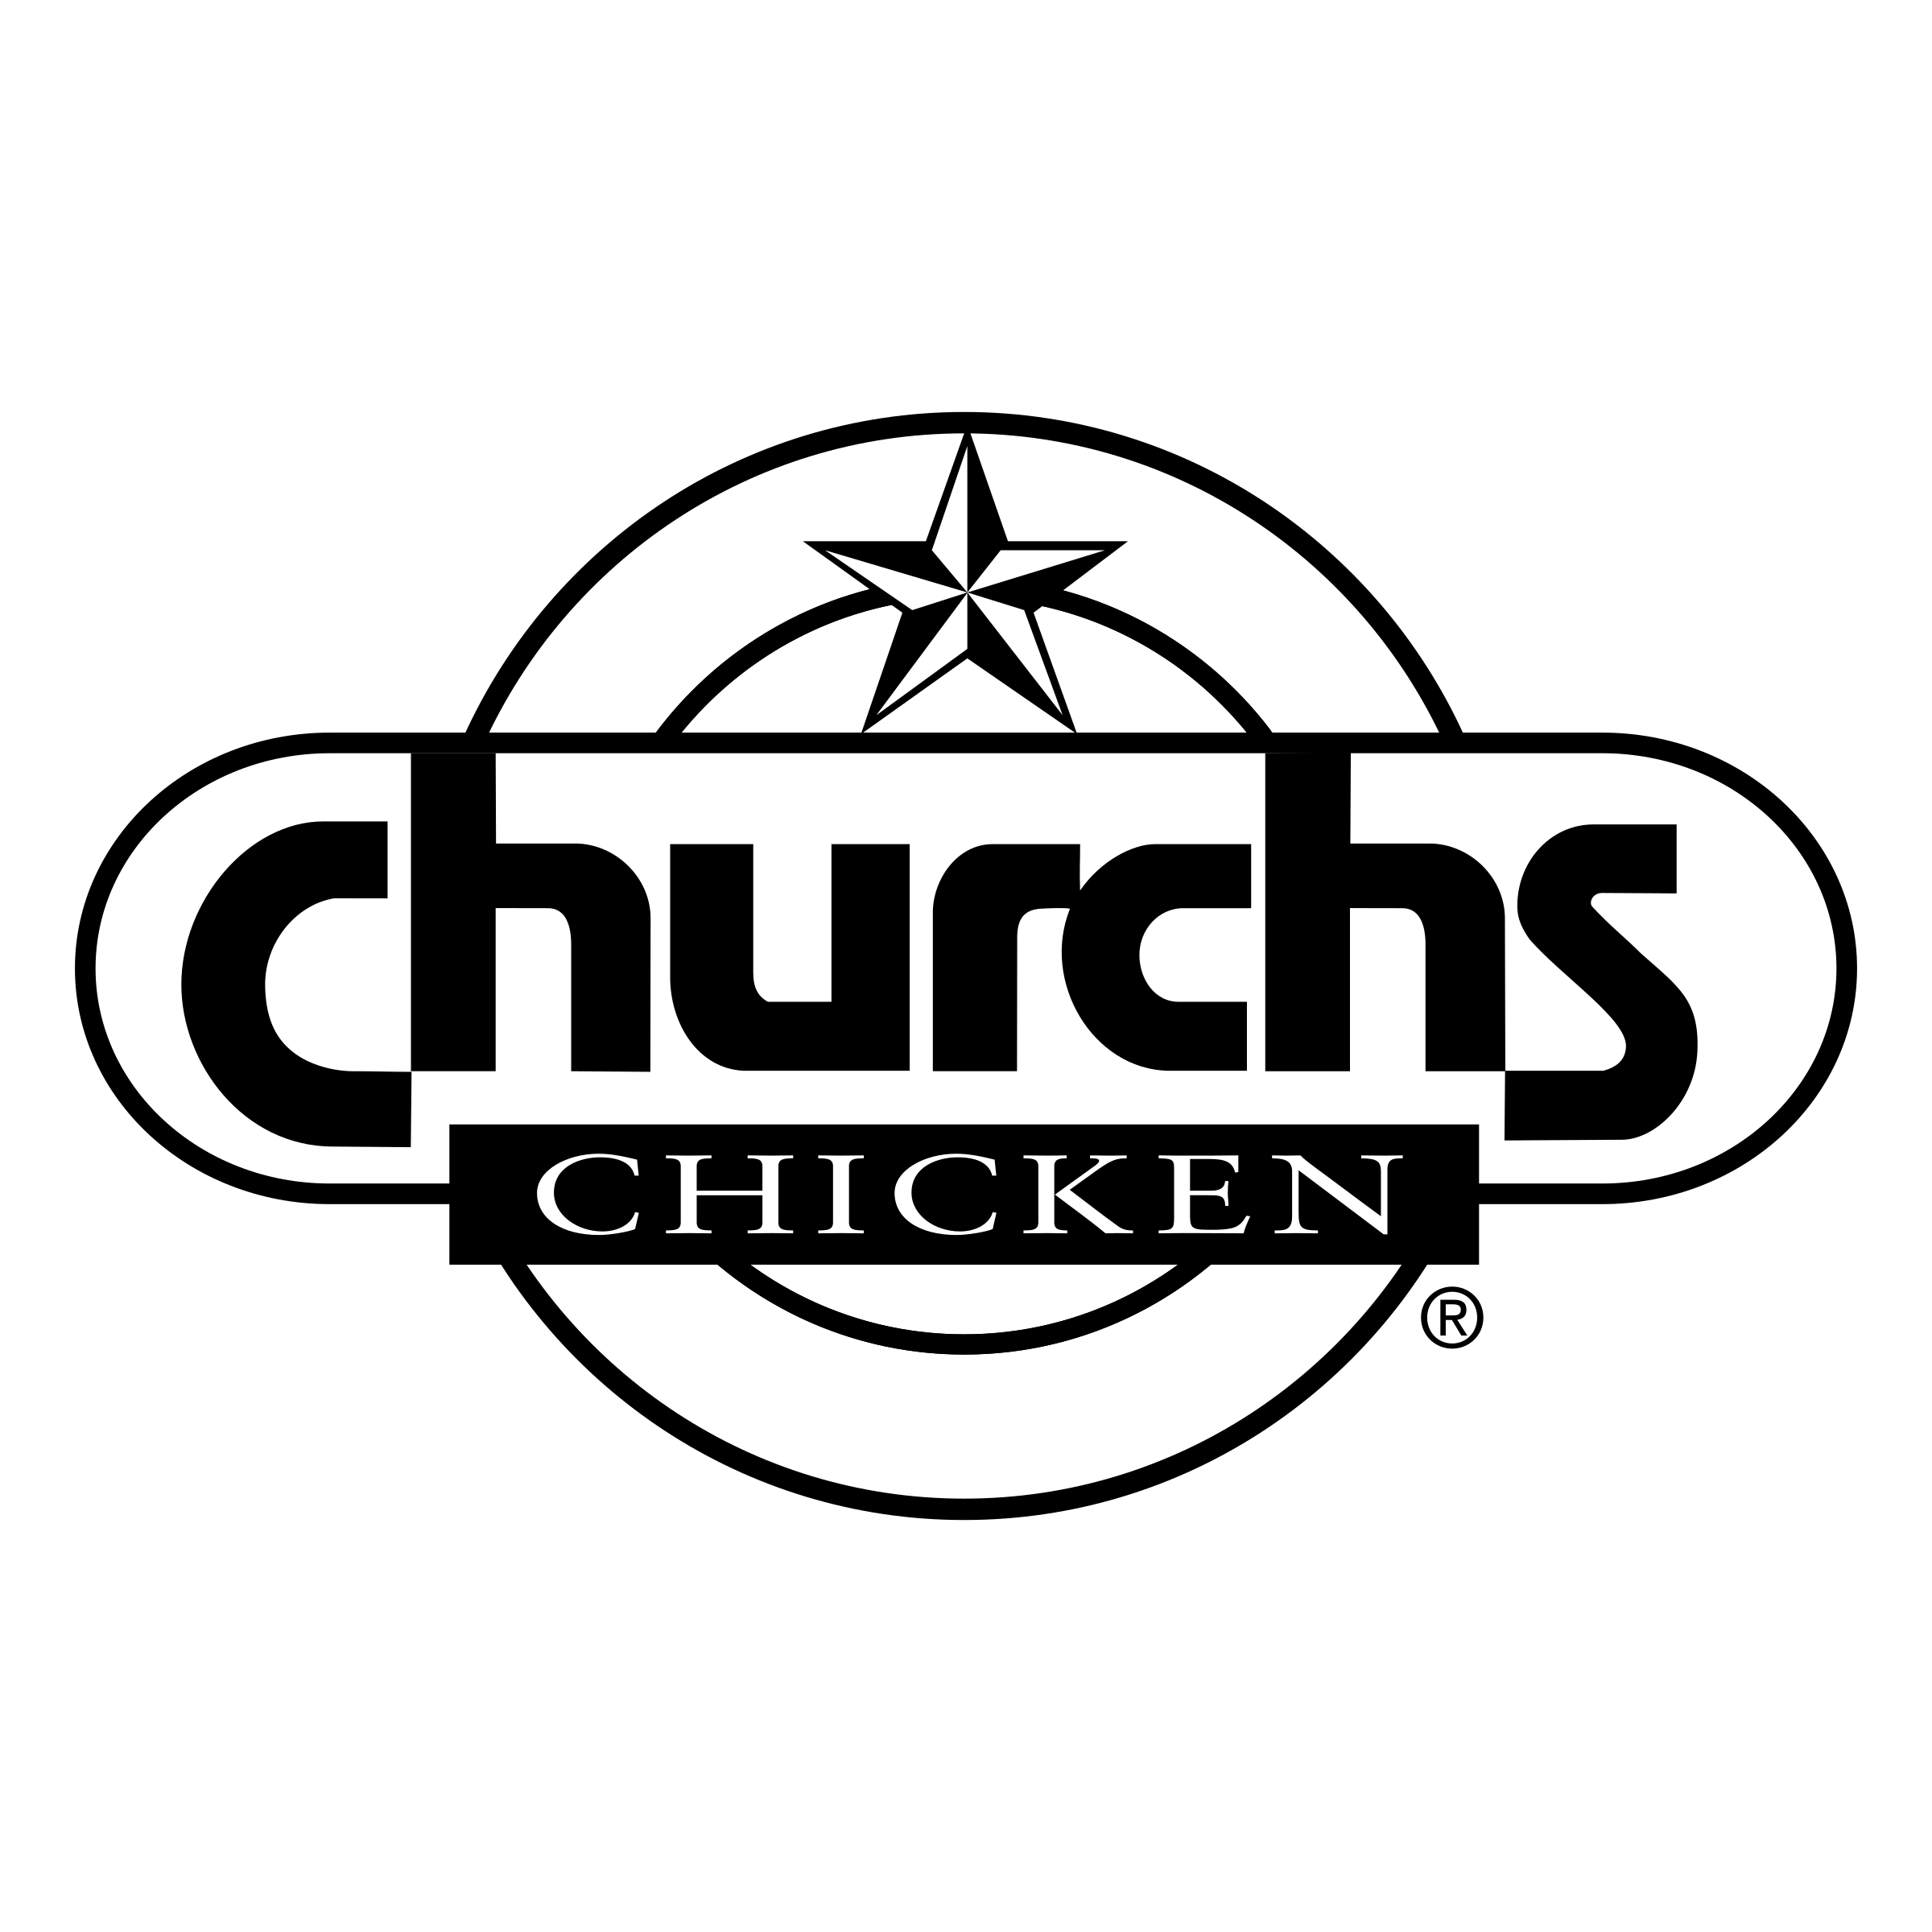 Church's Chicken Logo - Church's Chicken Logo PNG Transparent & SVG Vector - Freebie Supply